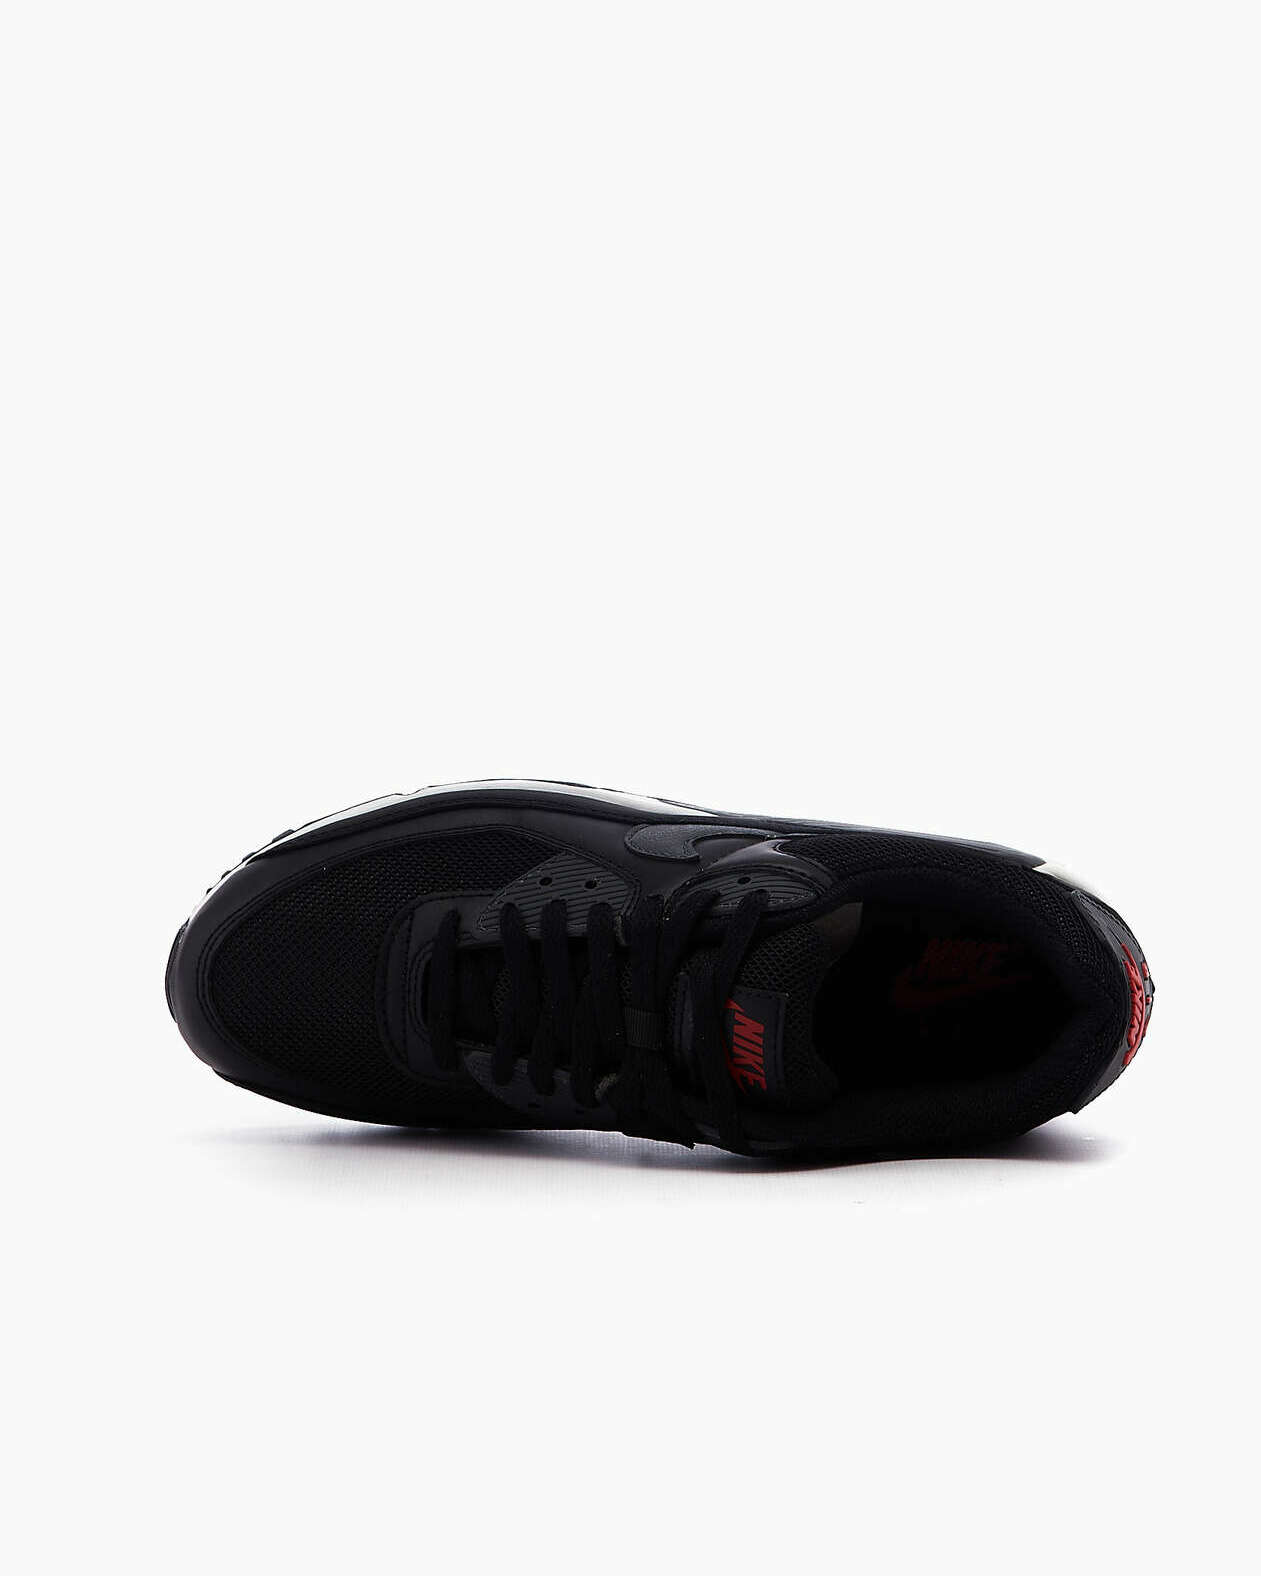 Intacto pantalla Característica Nike Air Max 90 Negro DH4095-001| Comprar Online en FOOTDISTRICT